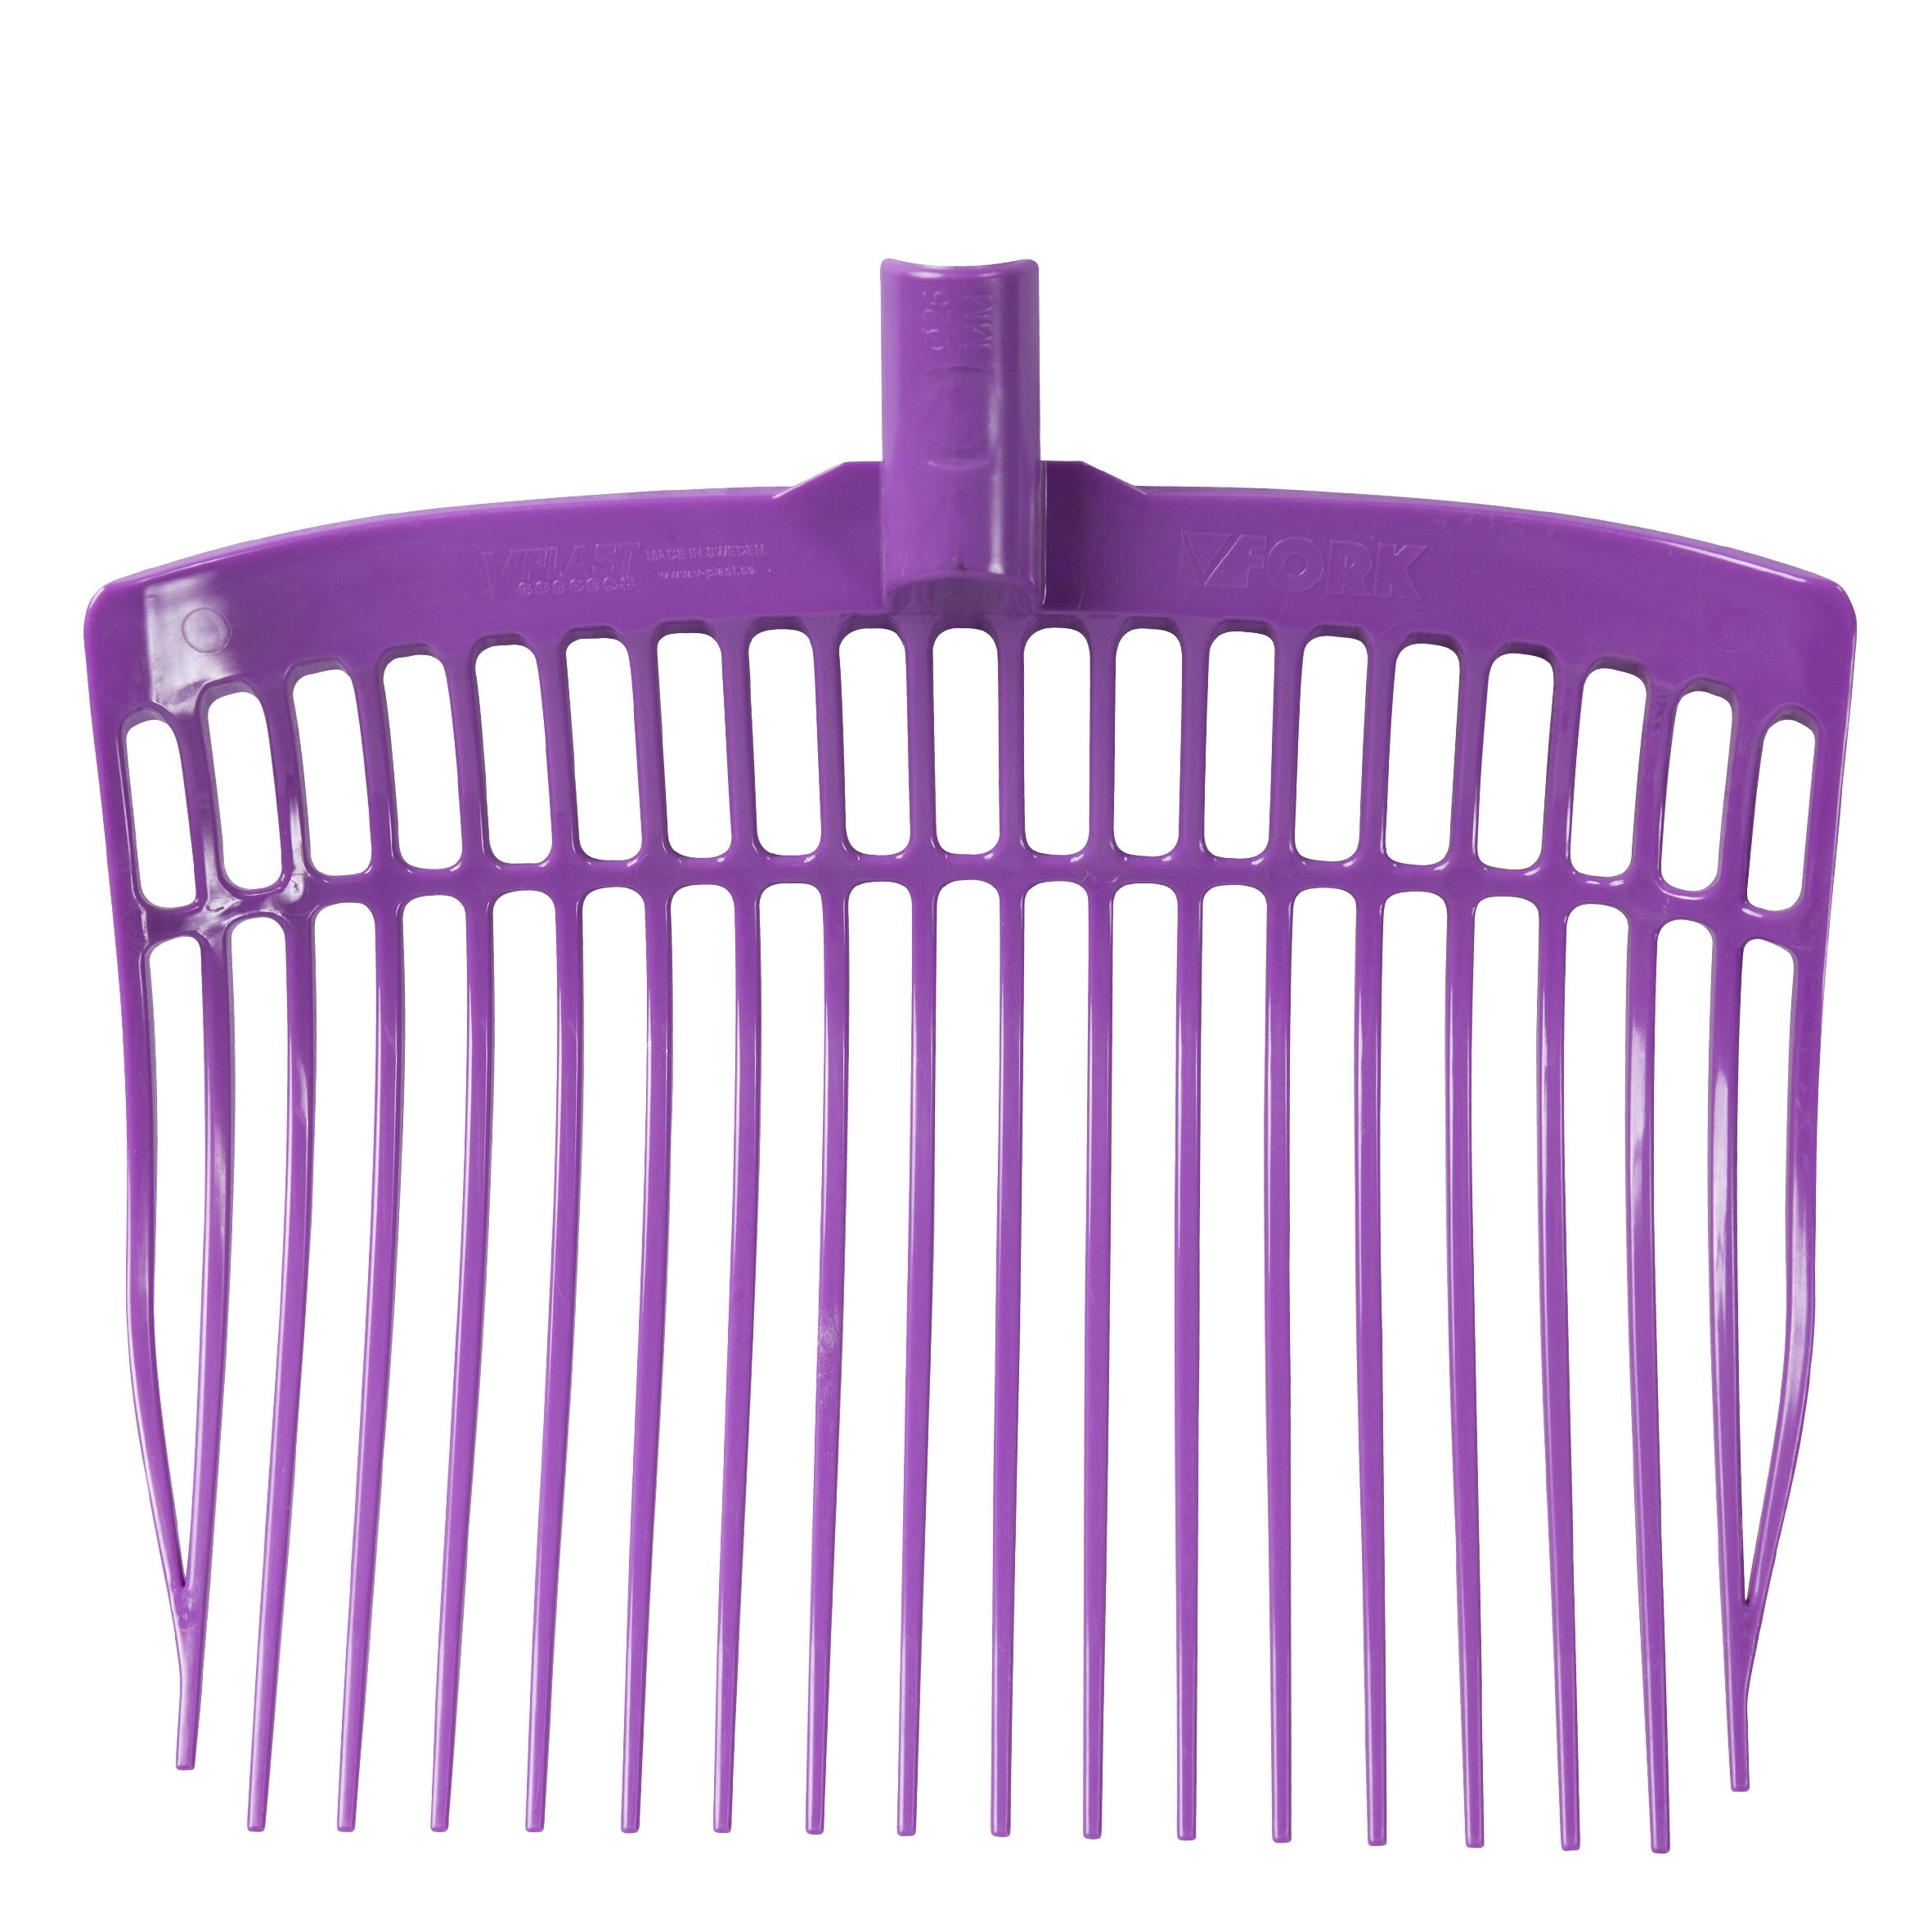 Fork head - purple